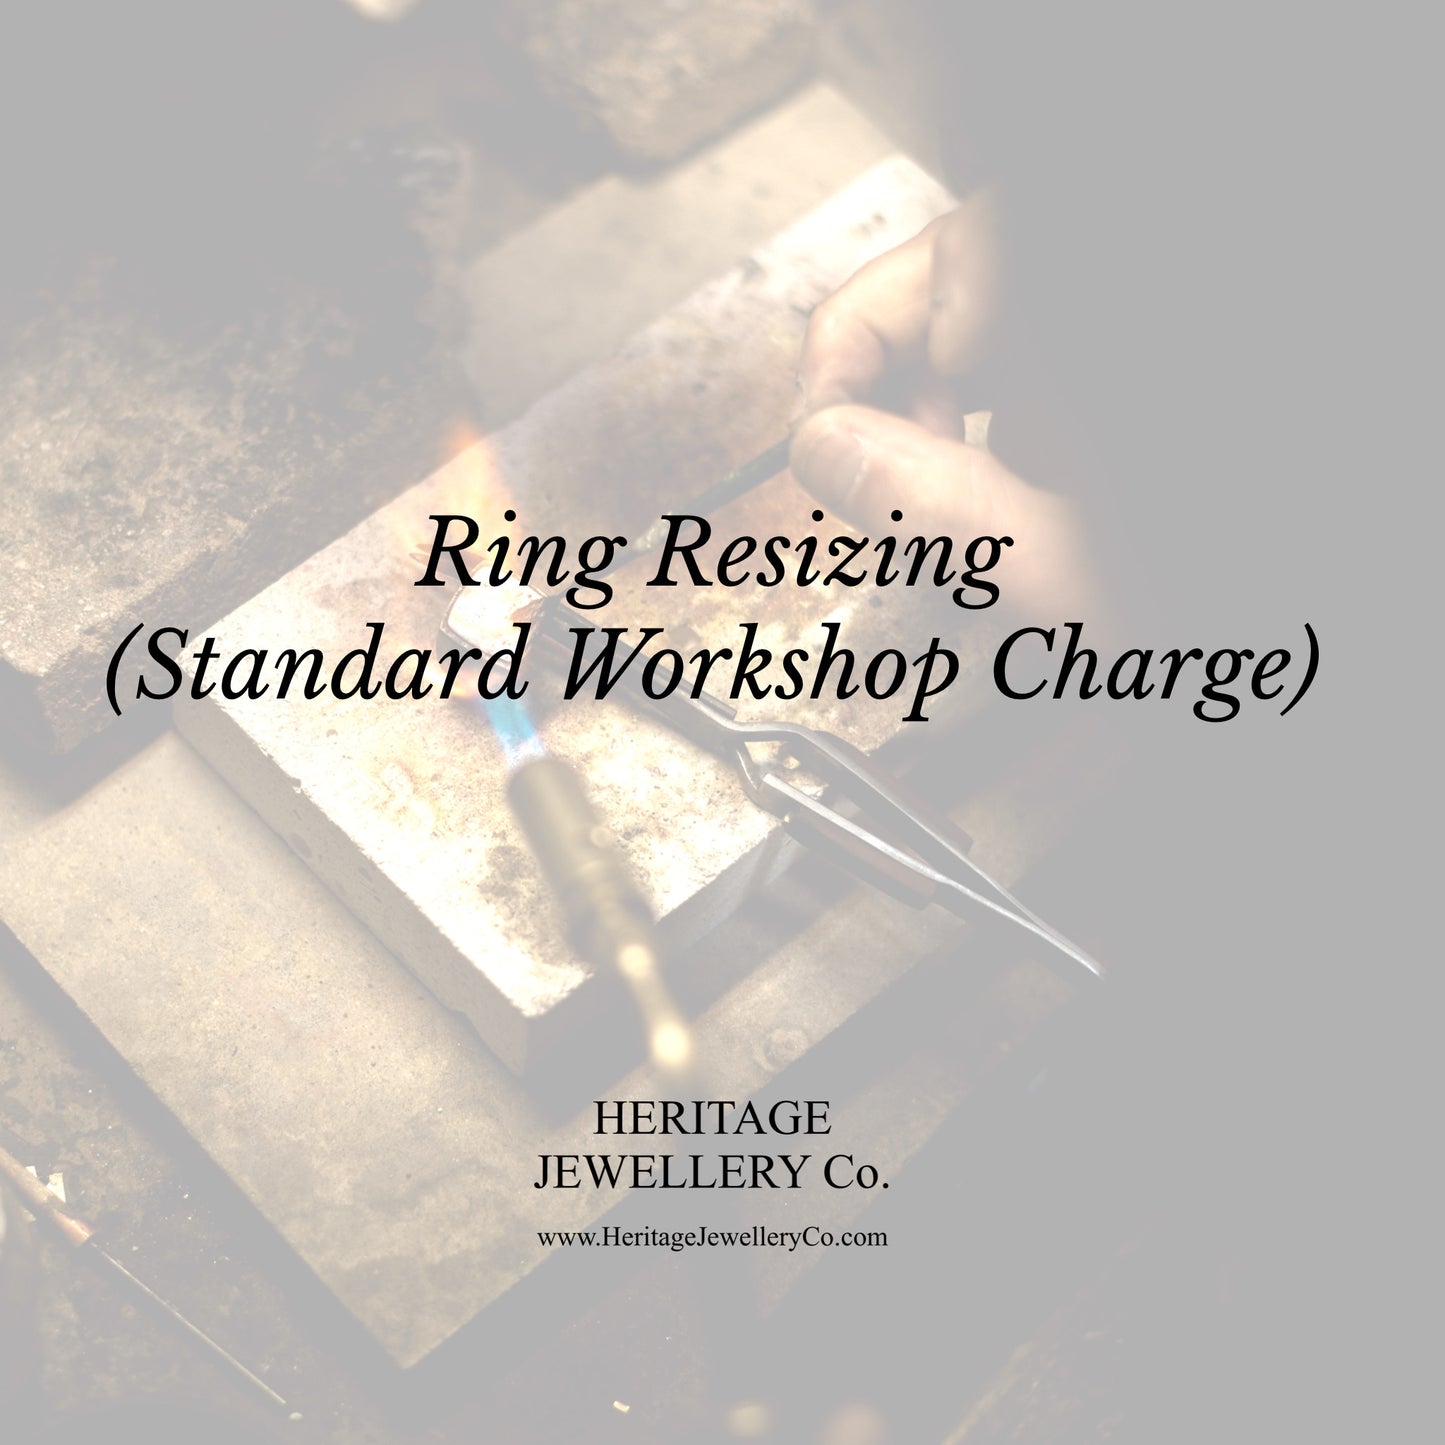 Ring Resizing (Standard Workshop Charge) - Minimum